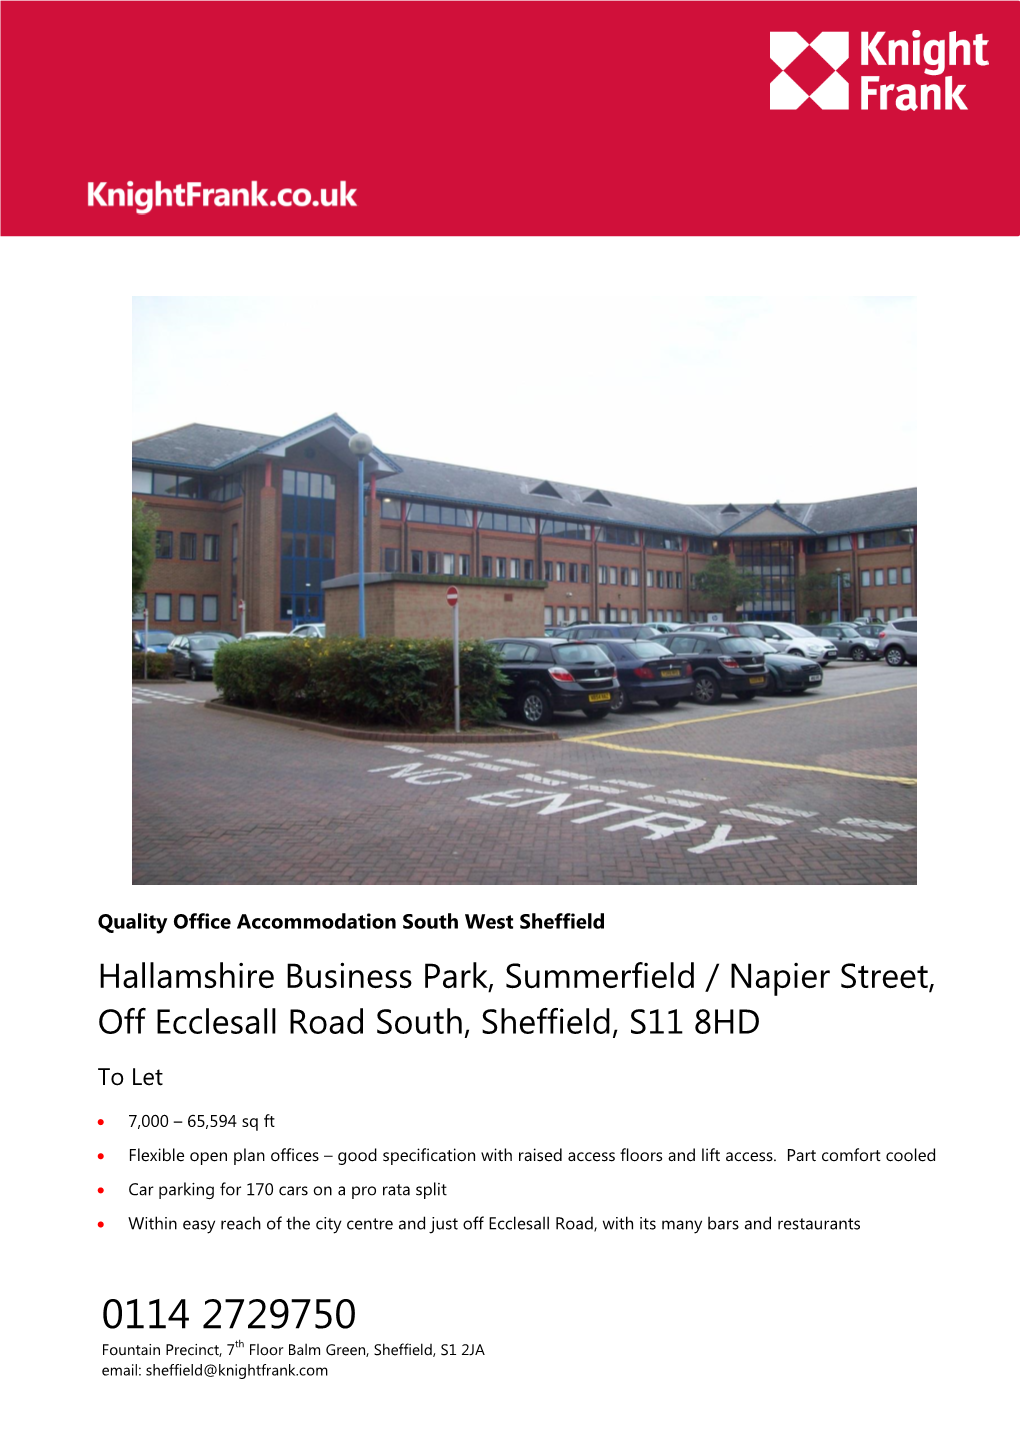 Hallamshire Business Park, Summerfield / Napier Street, Off Ecclesall Road South, Sheffield, S11 8HD